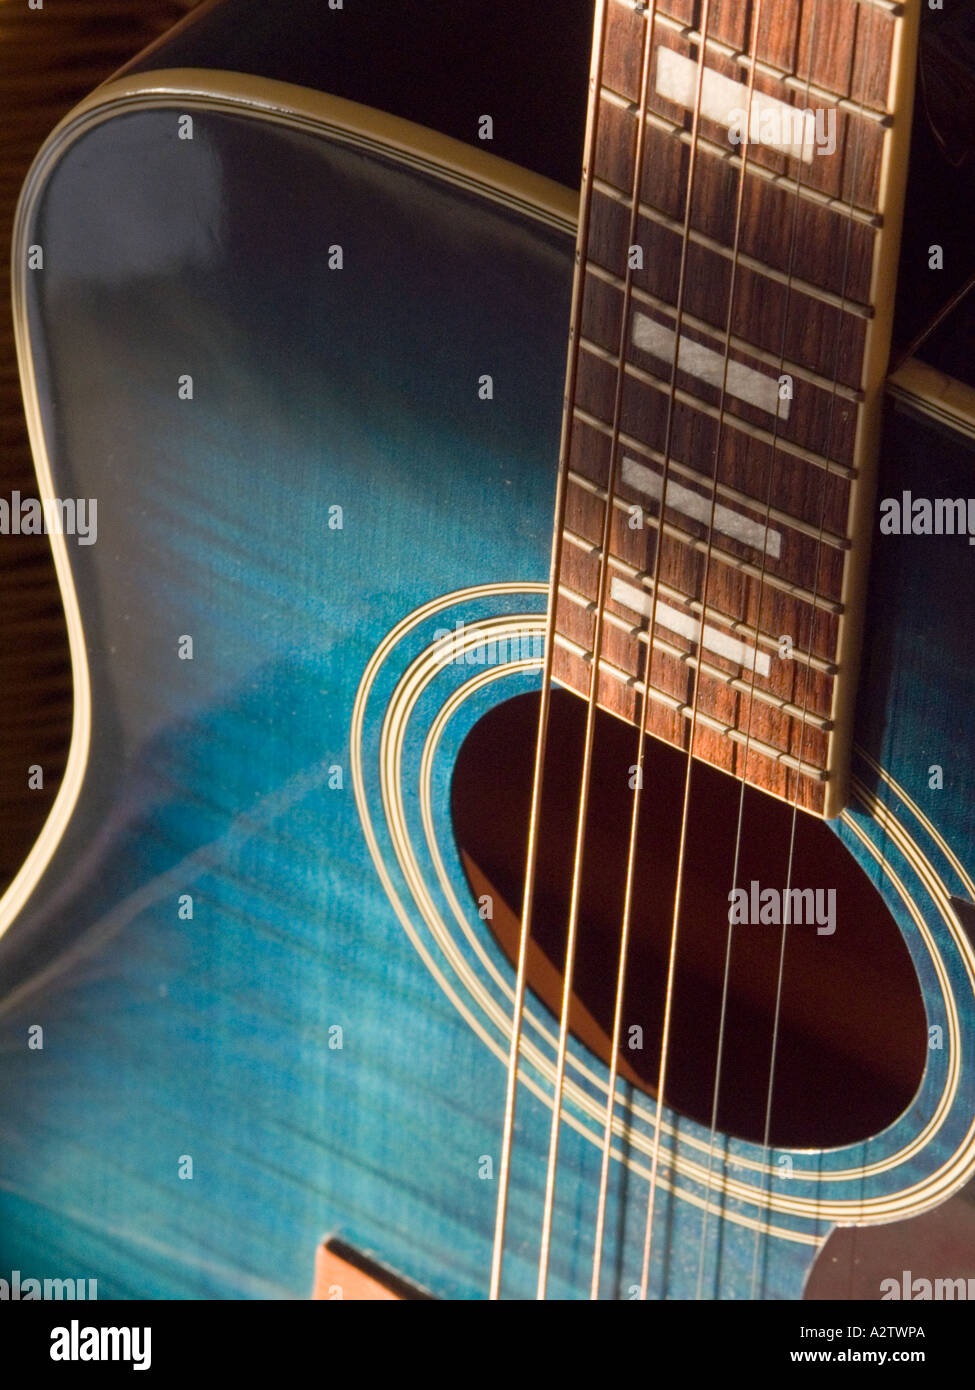 acoustic ibanez guitars wallpaper